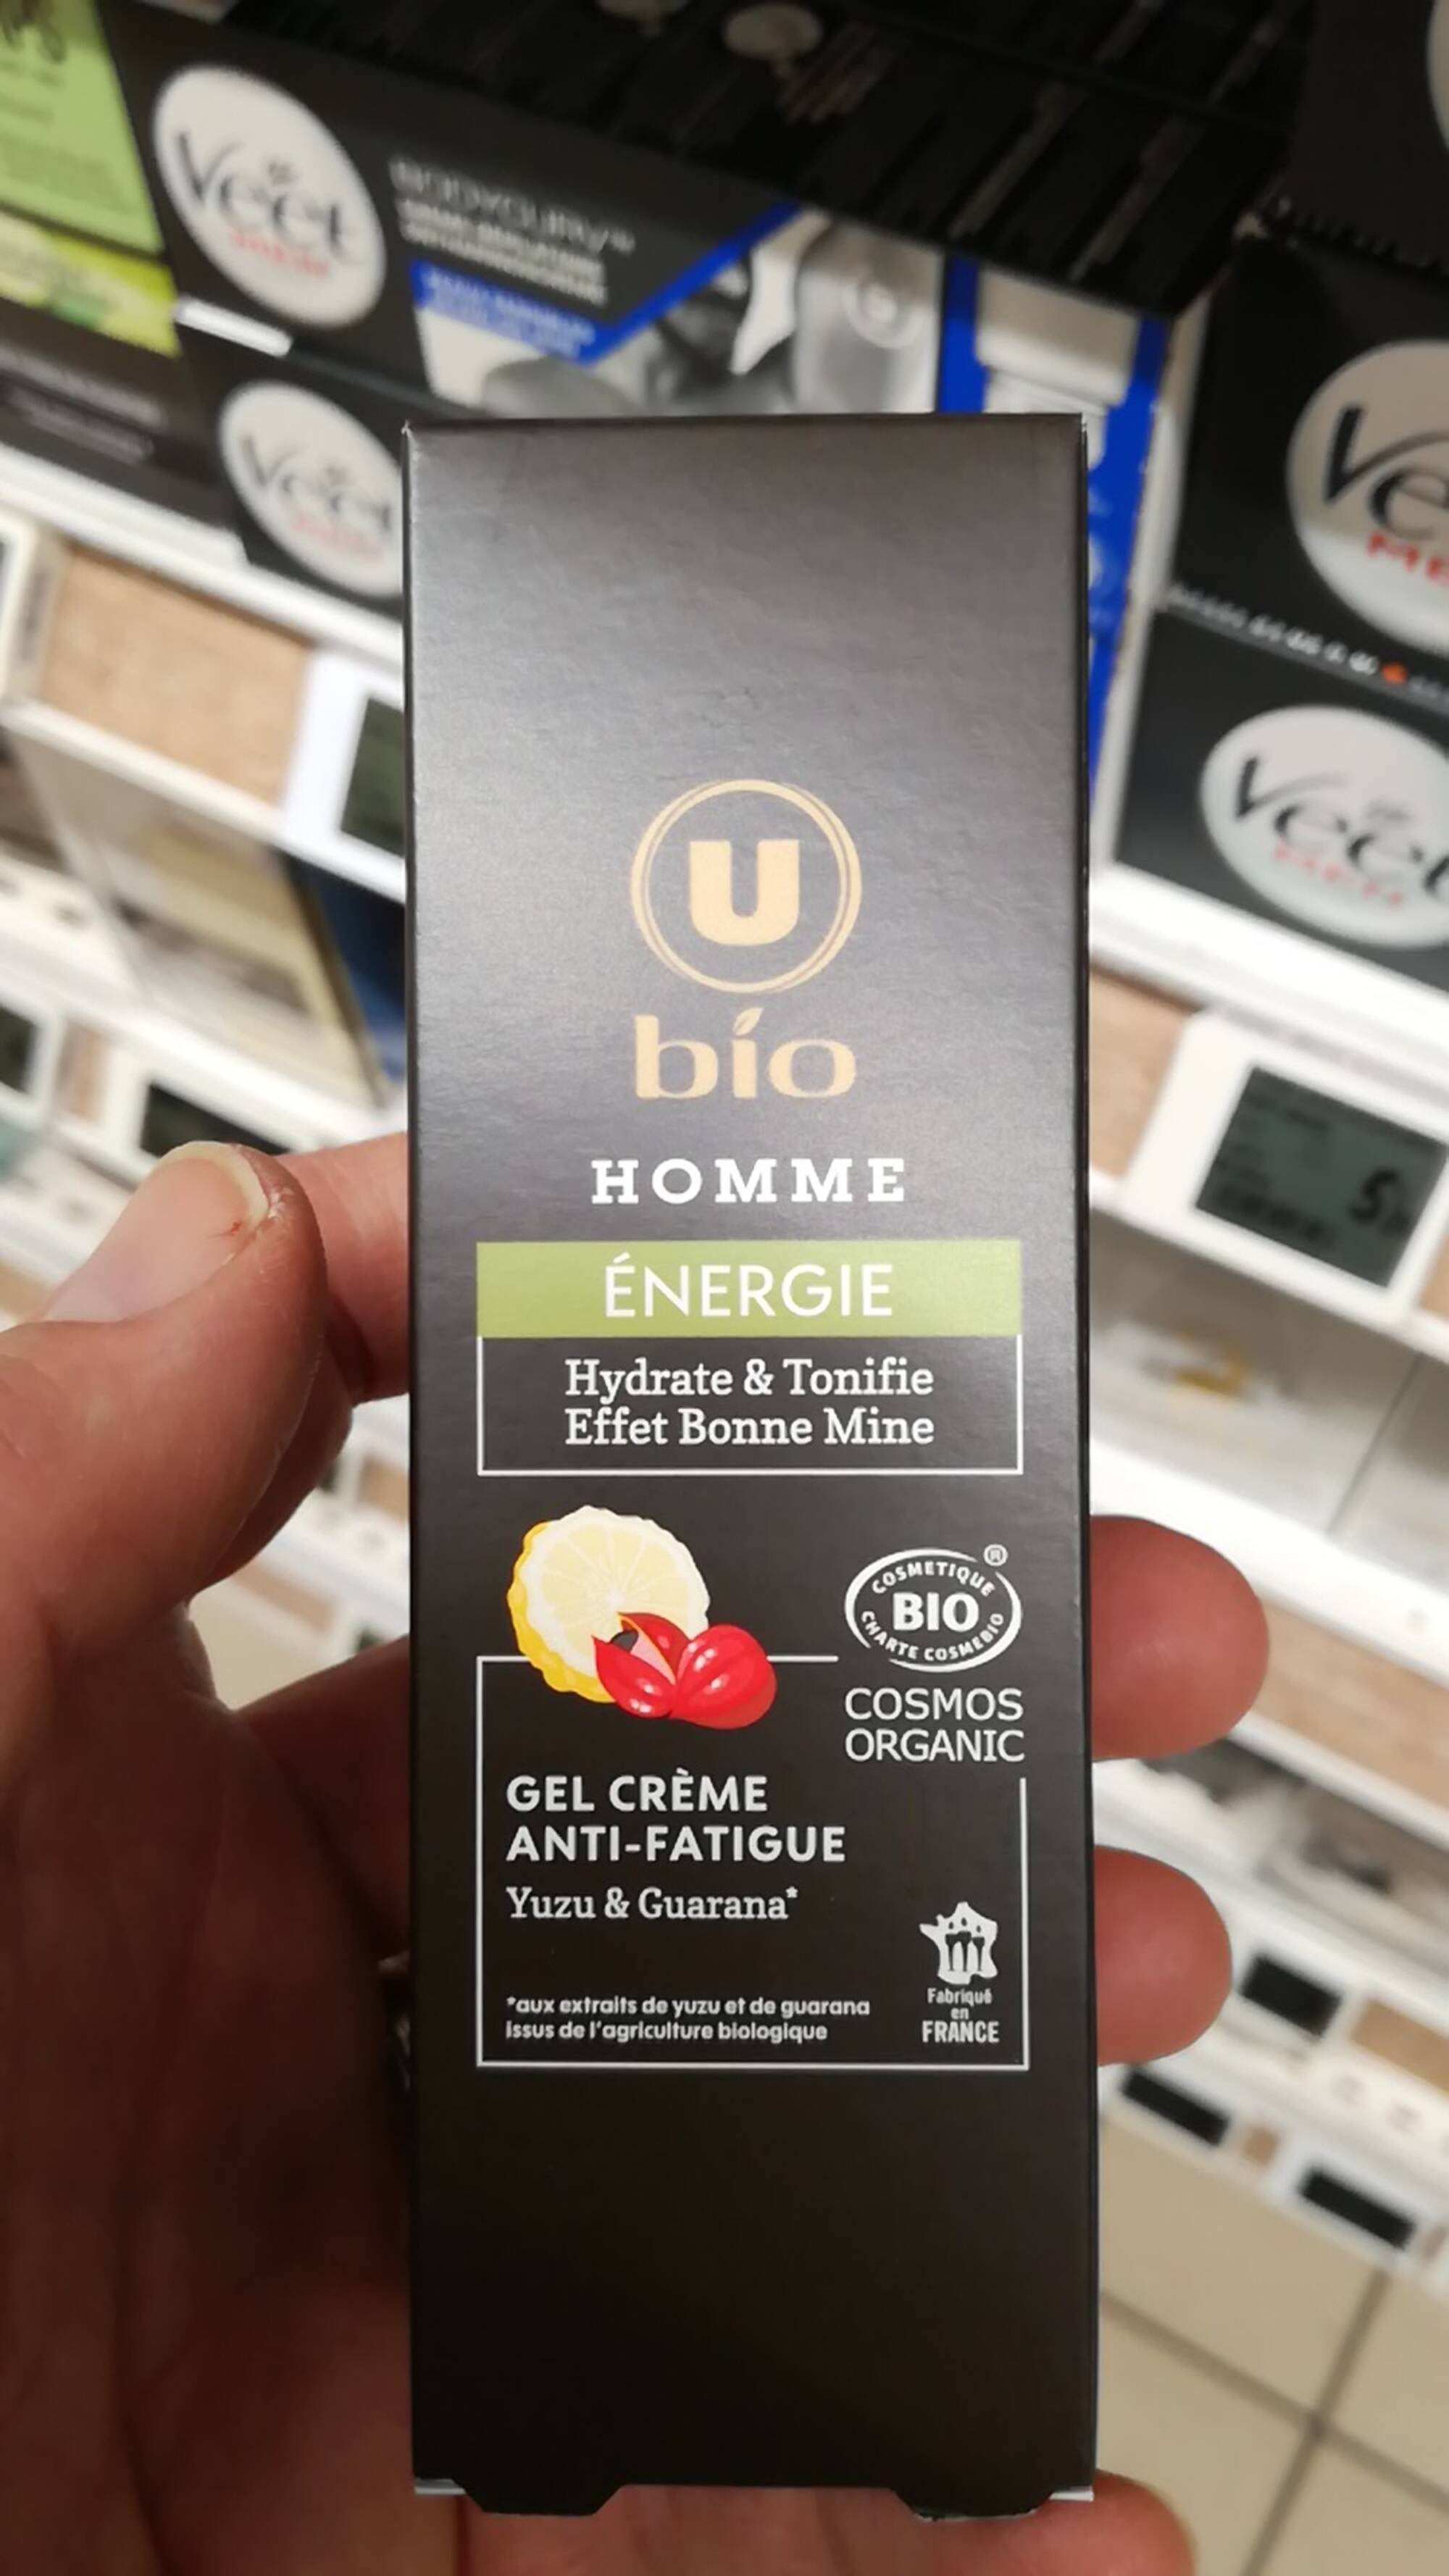 U BIO - Energie - Gel crème anti-fatigue homme 